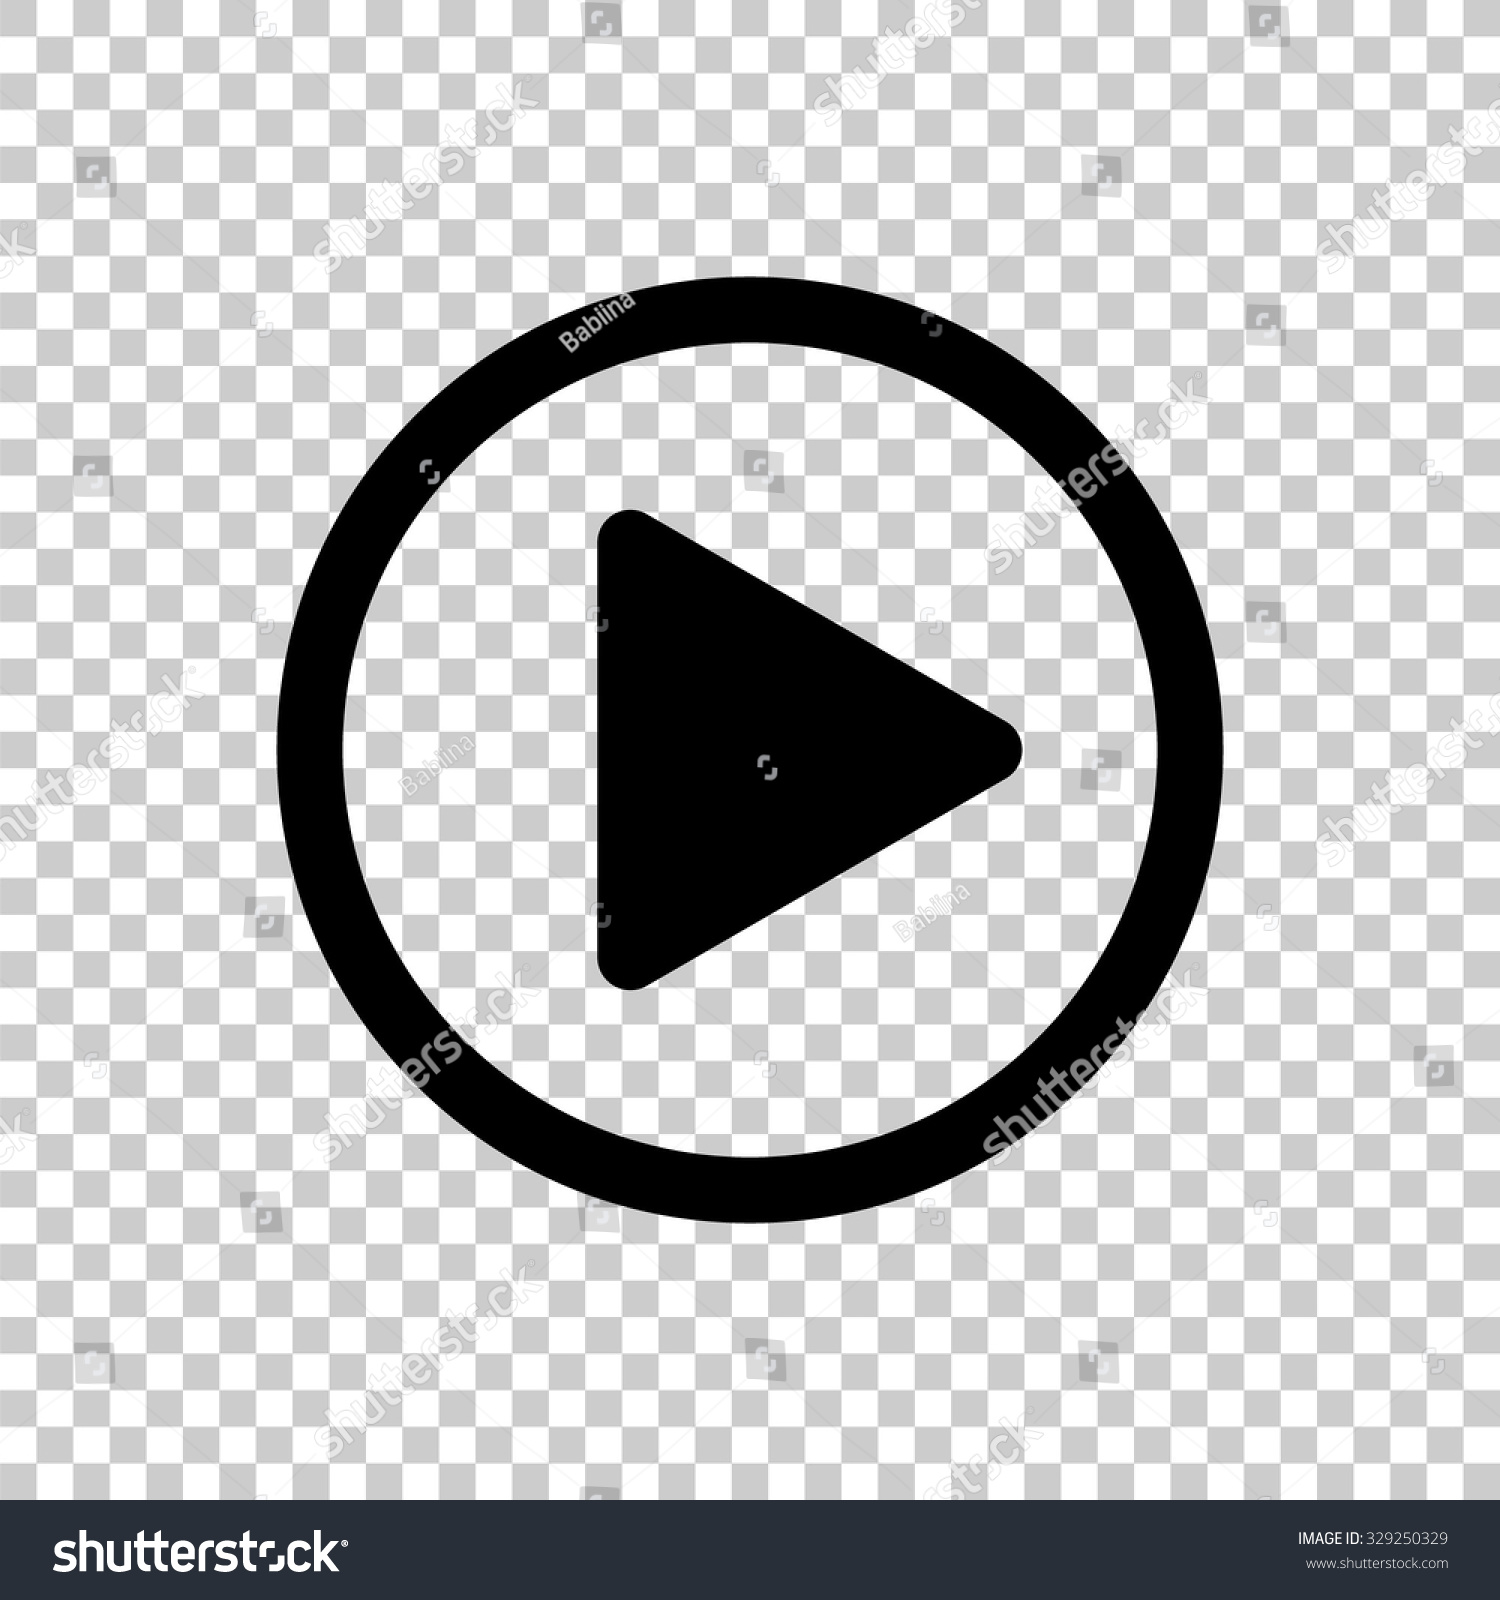 Arrow, button, movie, play, video icon | Icon search engine